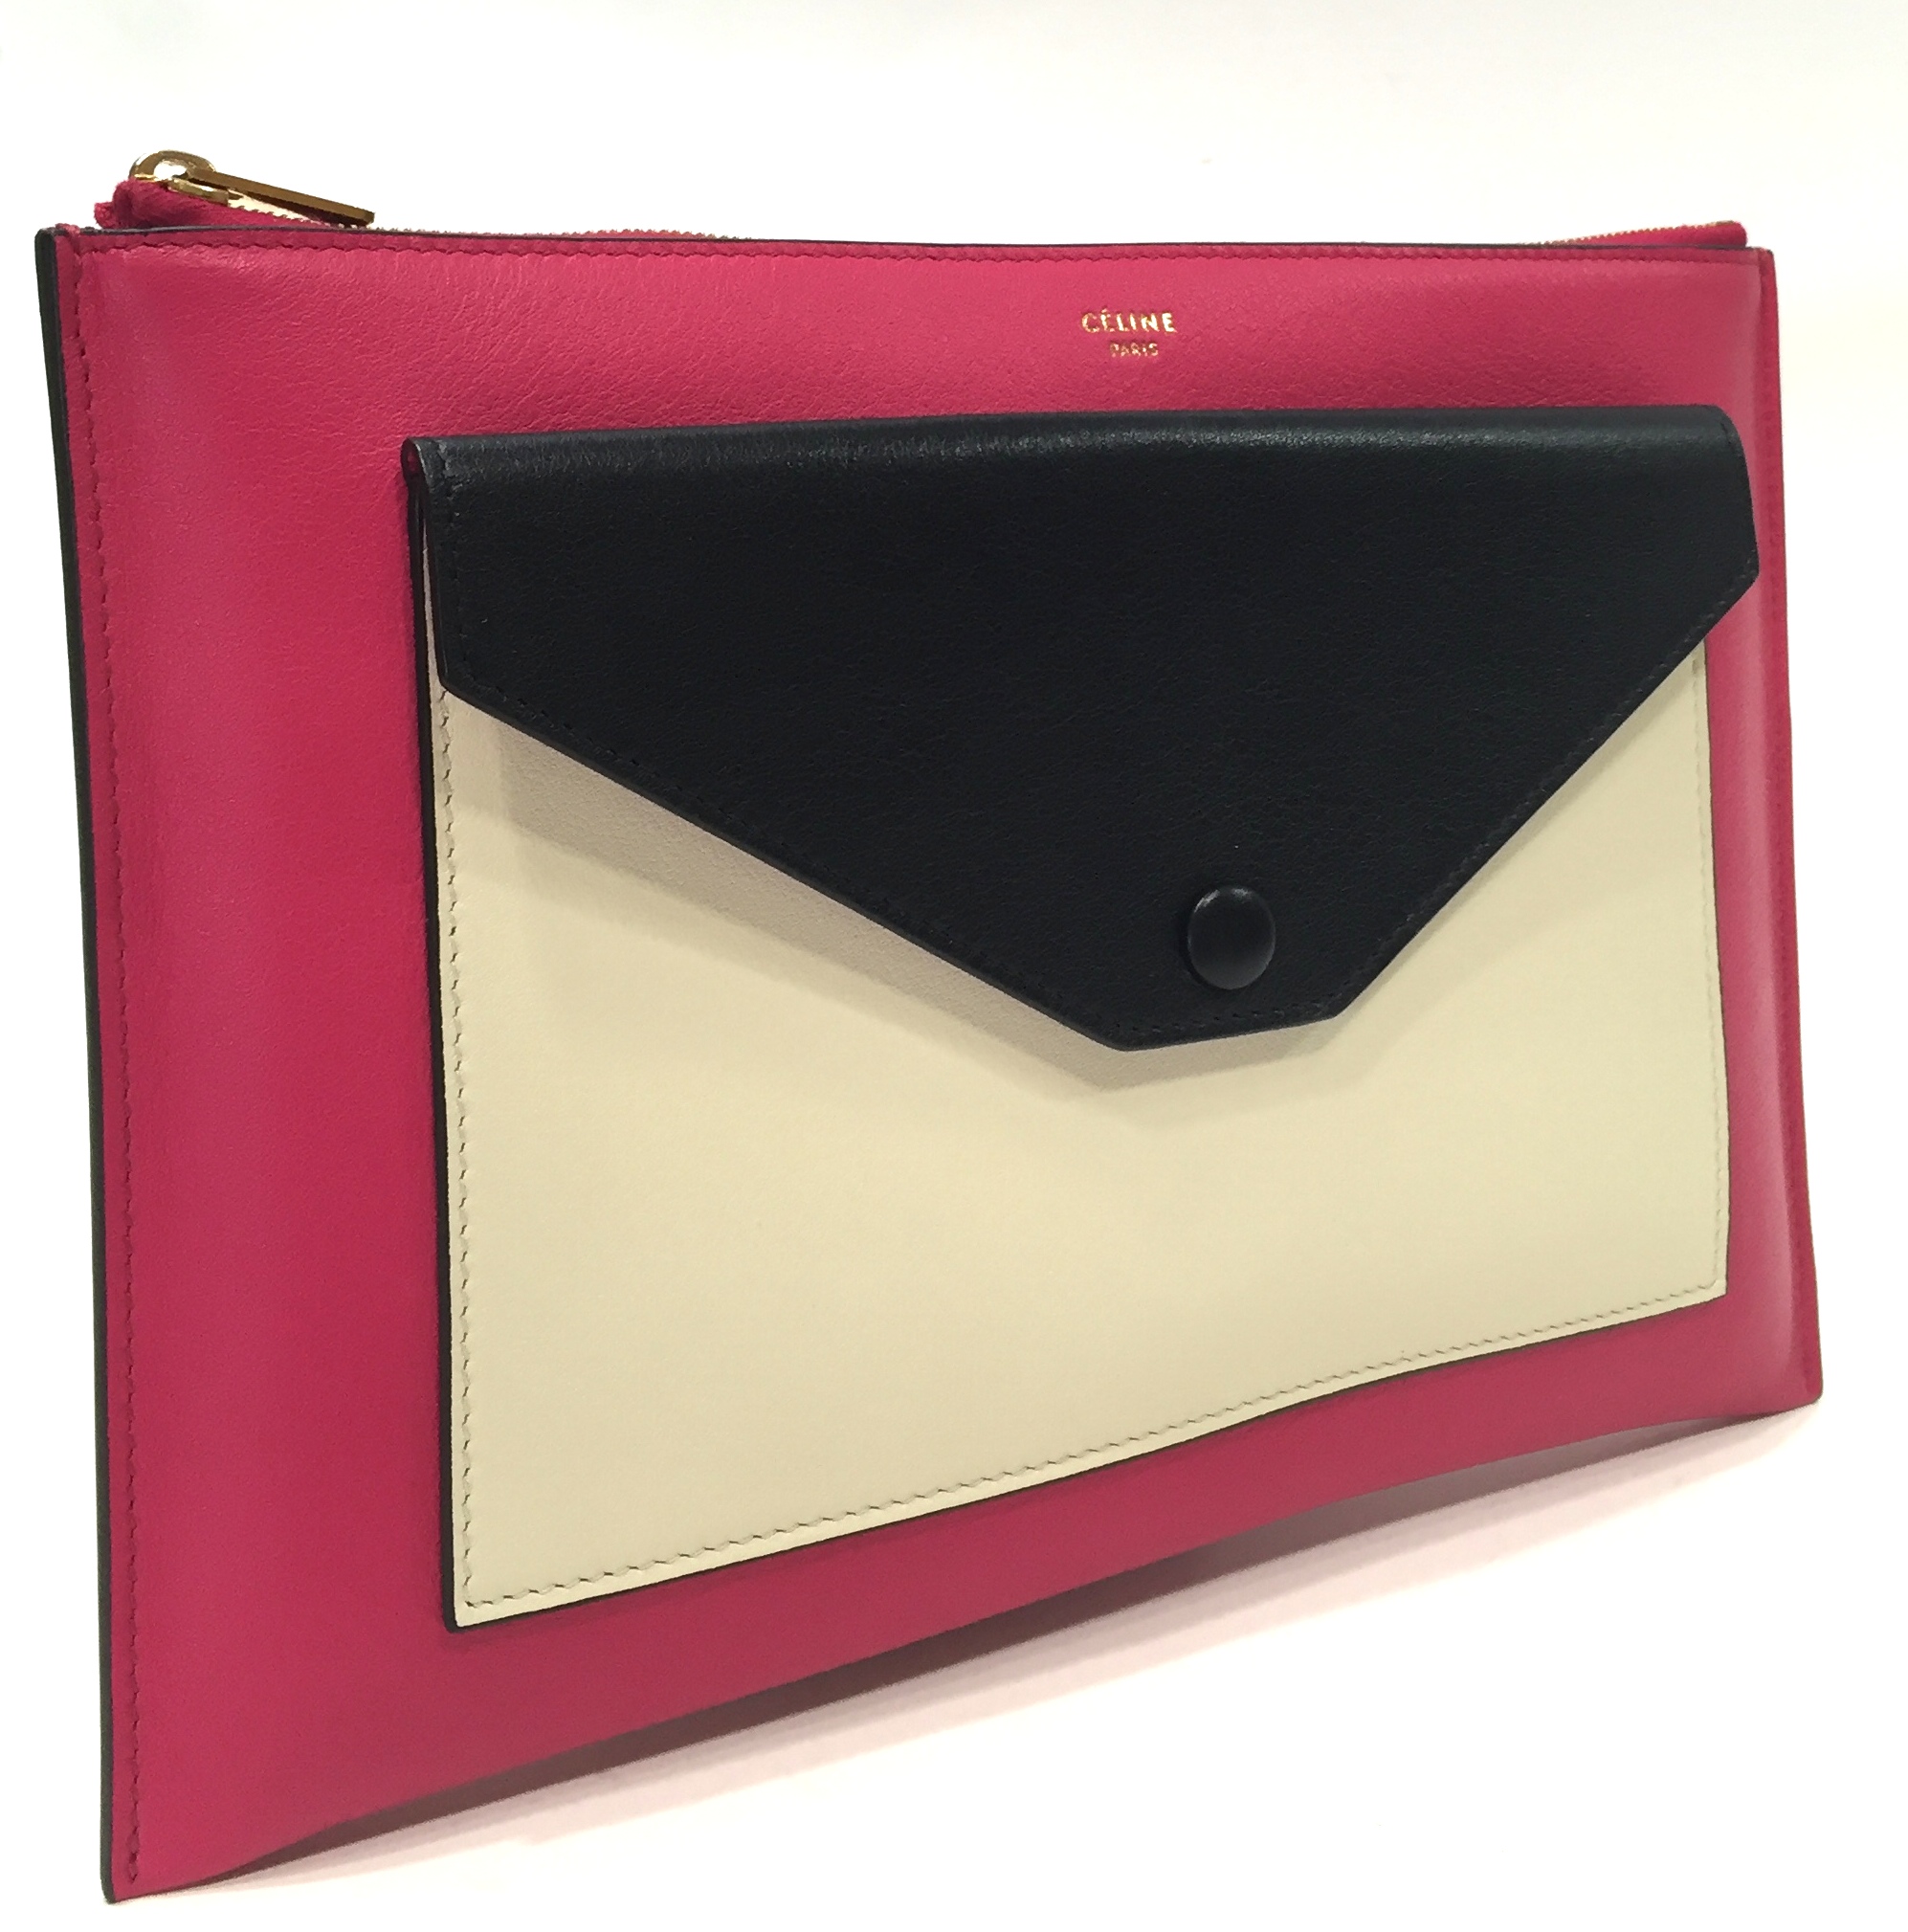 Celine Fuschia and Cream Leather Pocket Clutch Handbag | Alexis ...